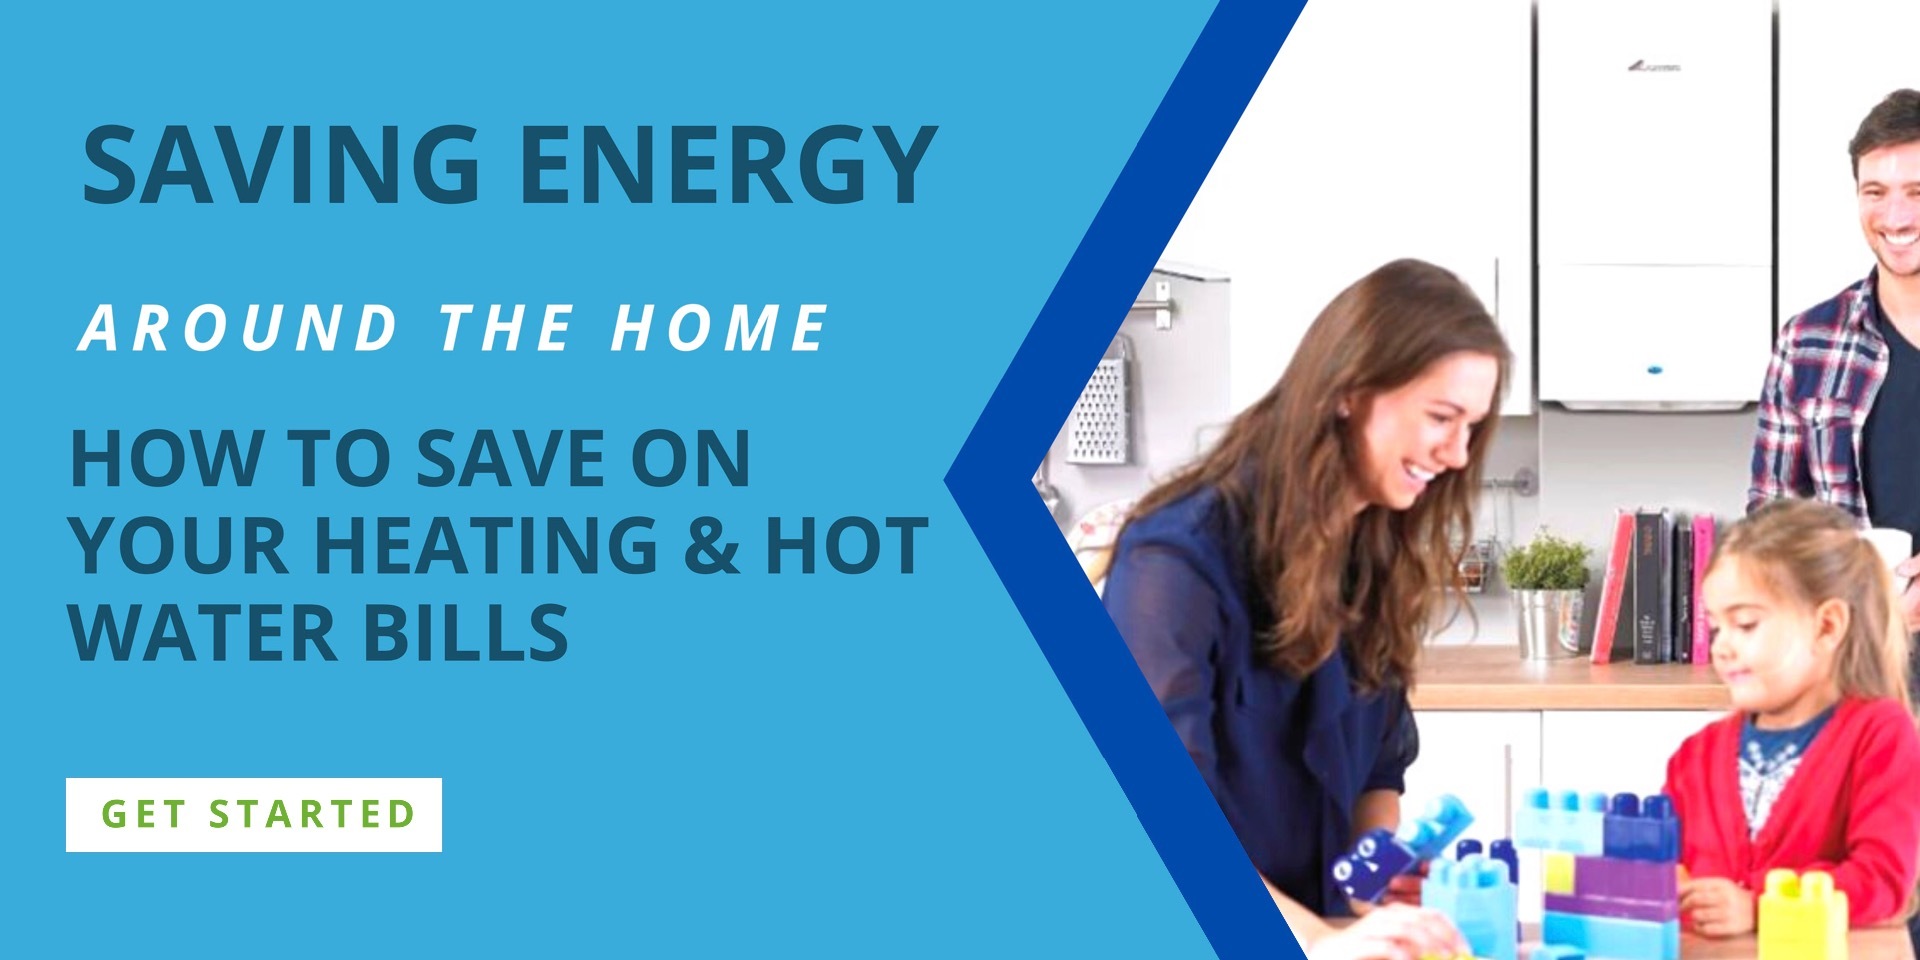 Saving energy around the home